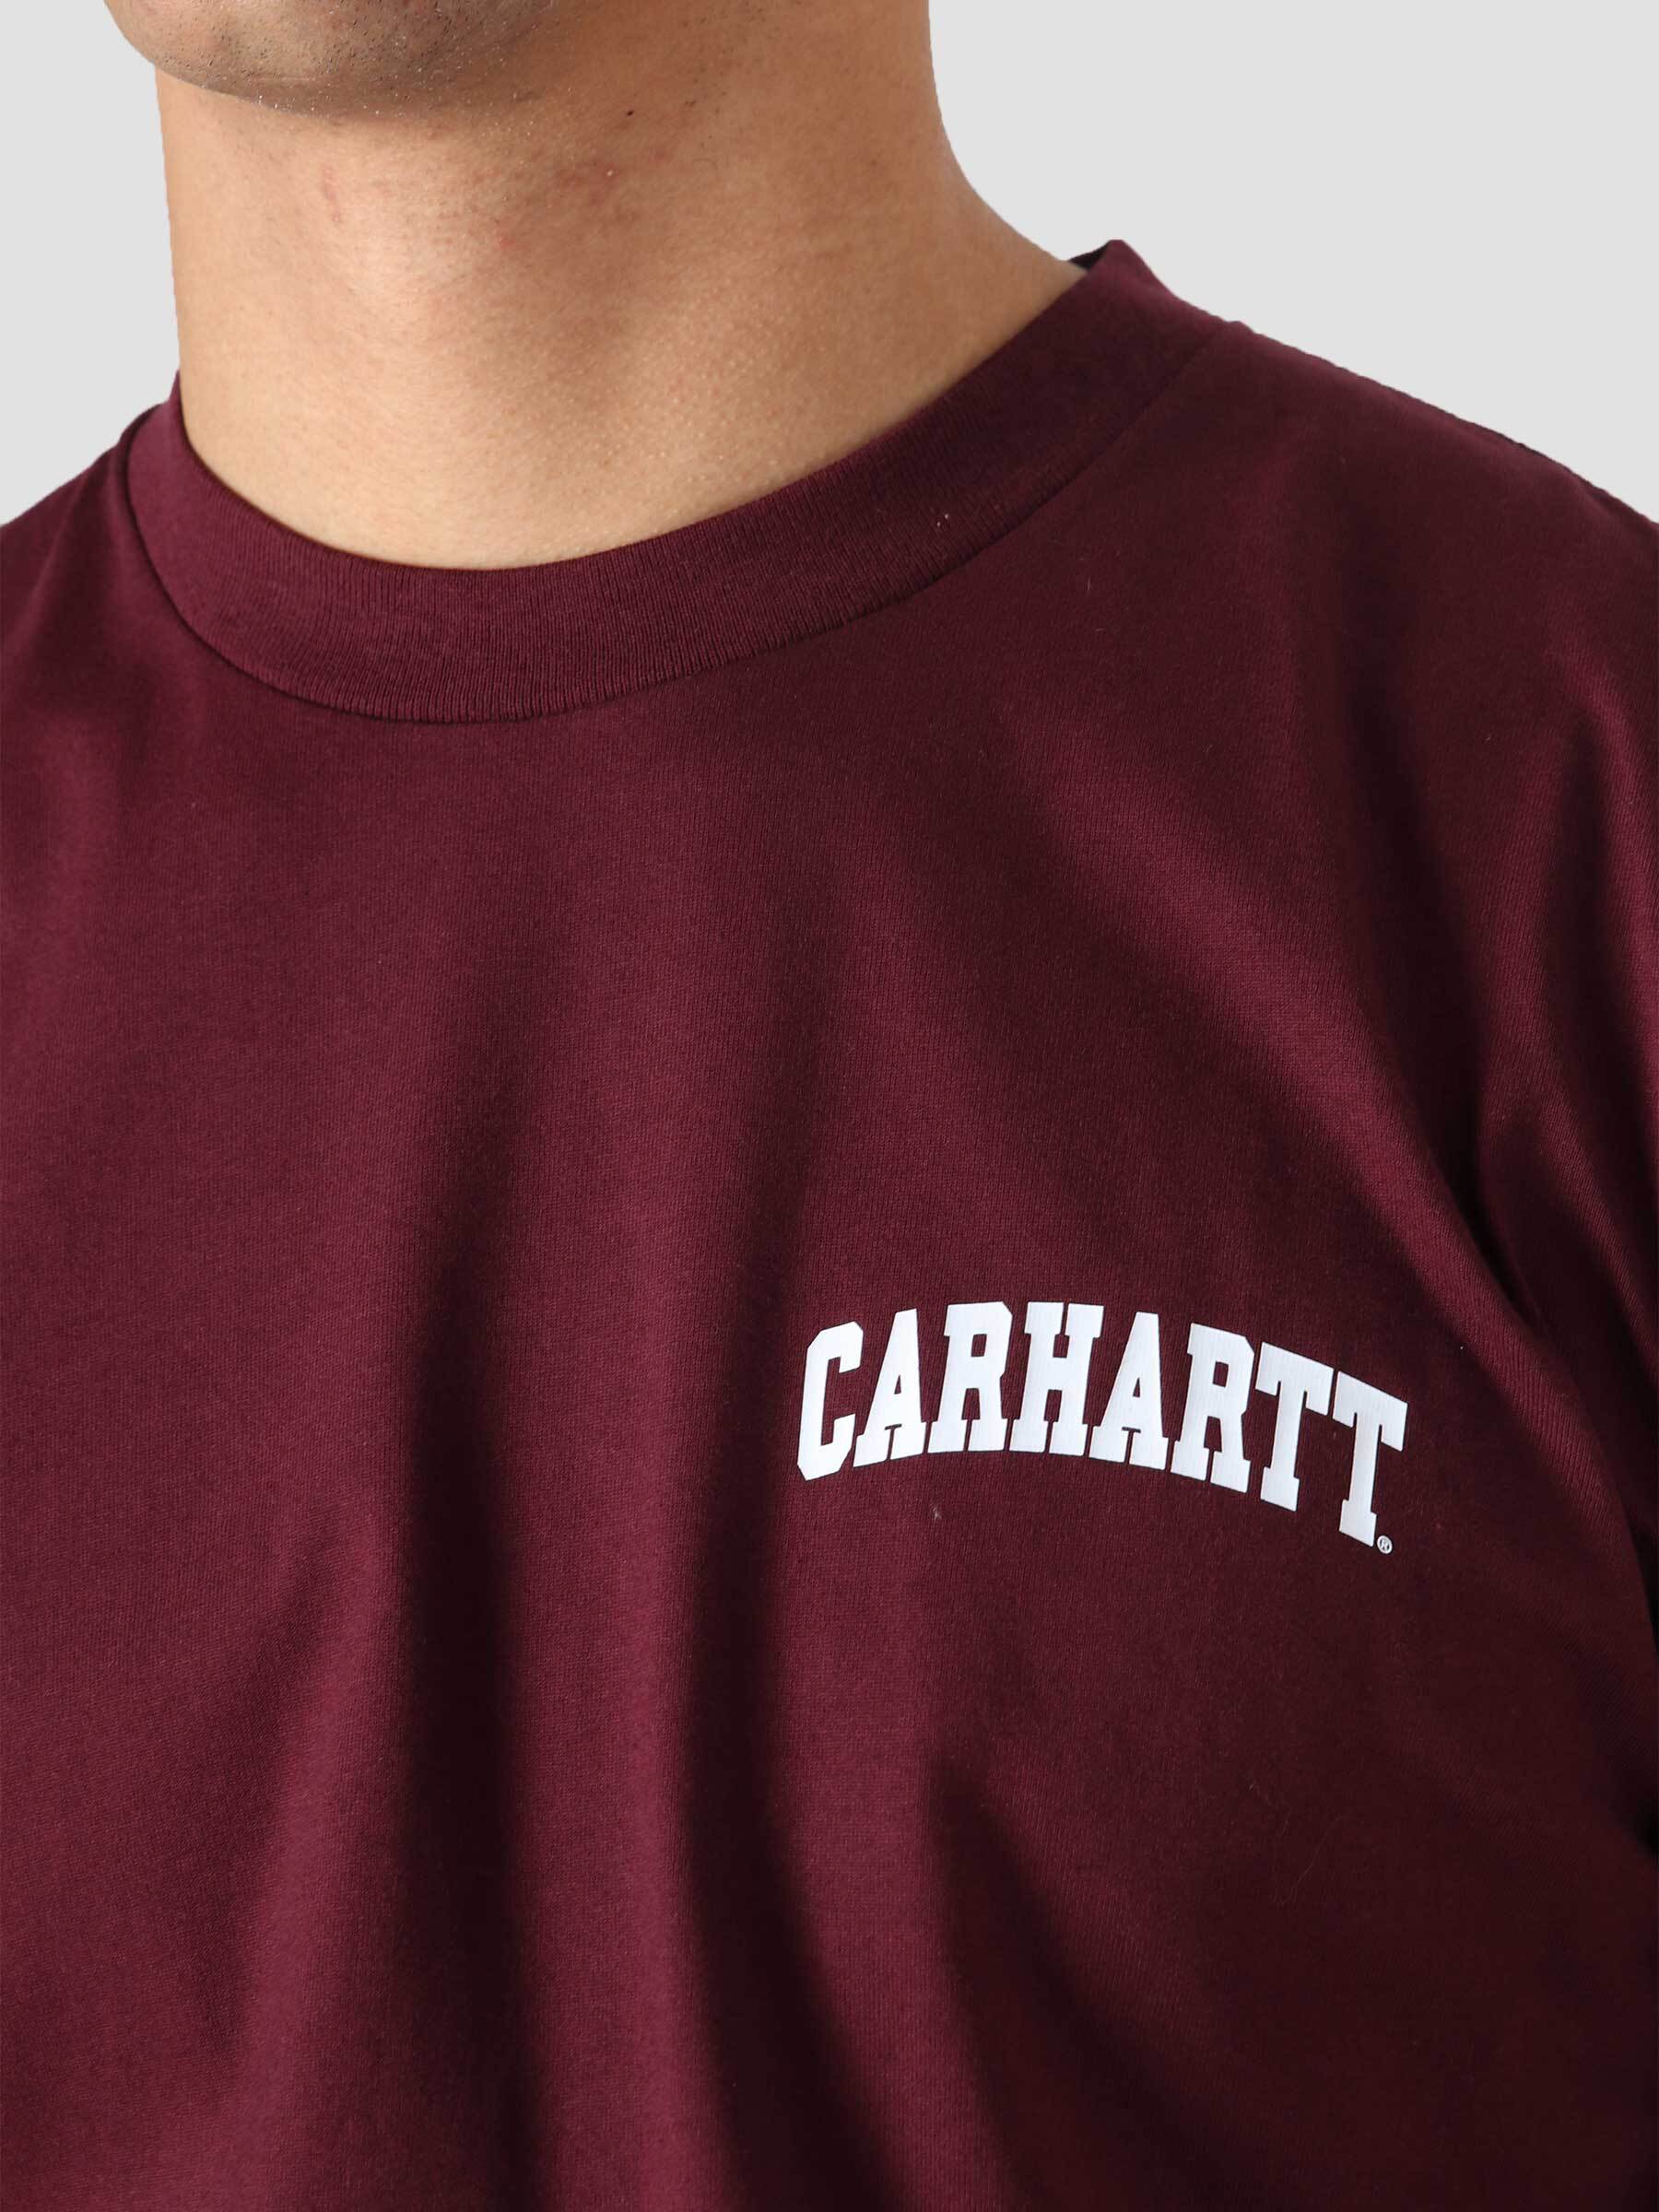 carhartt wip s/s university script t-shirt